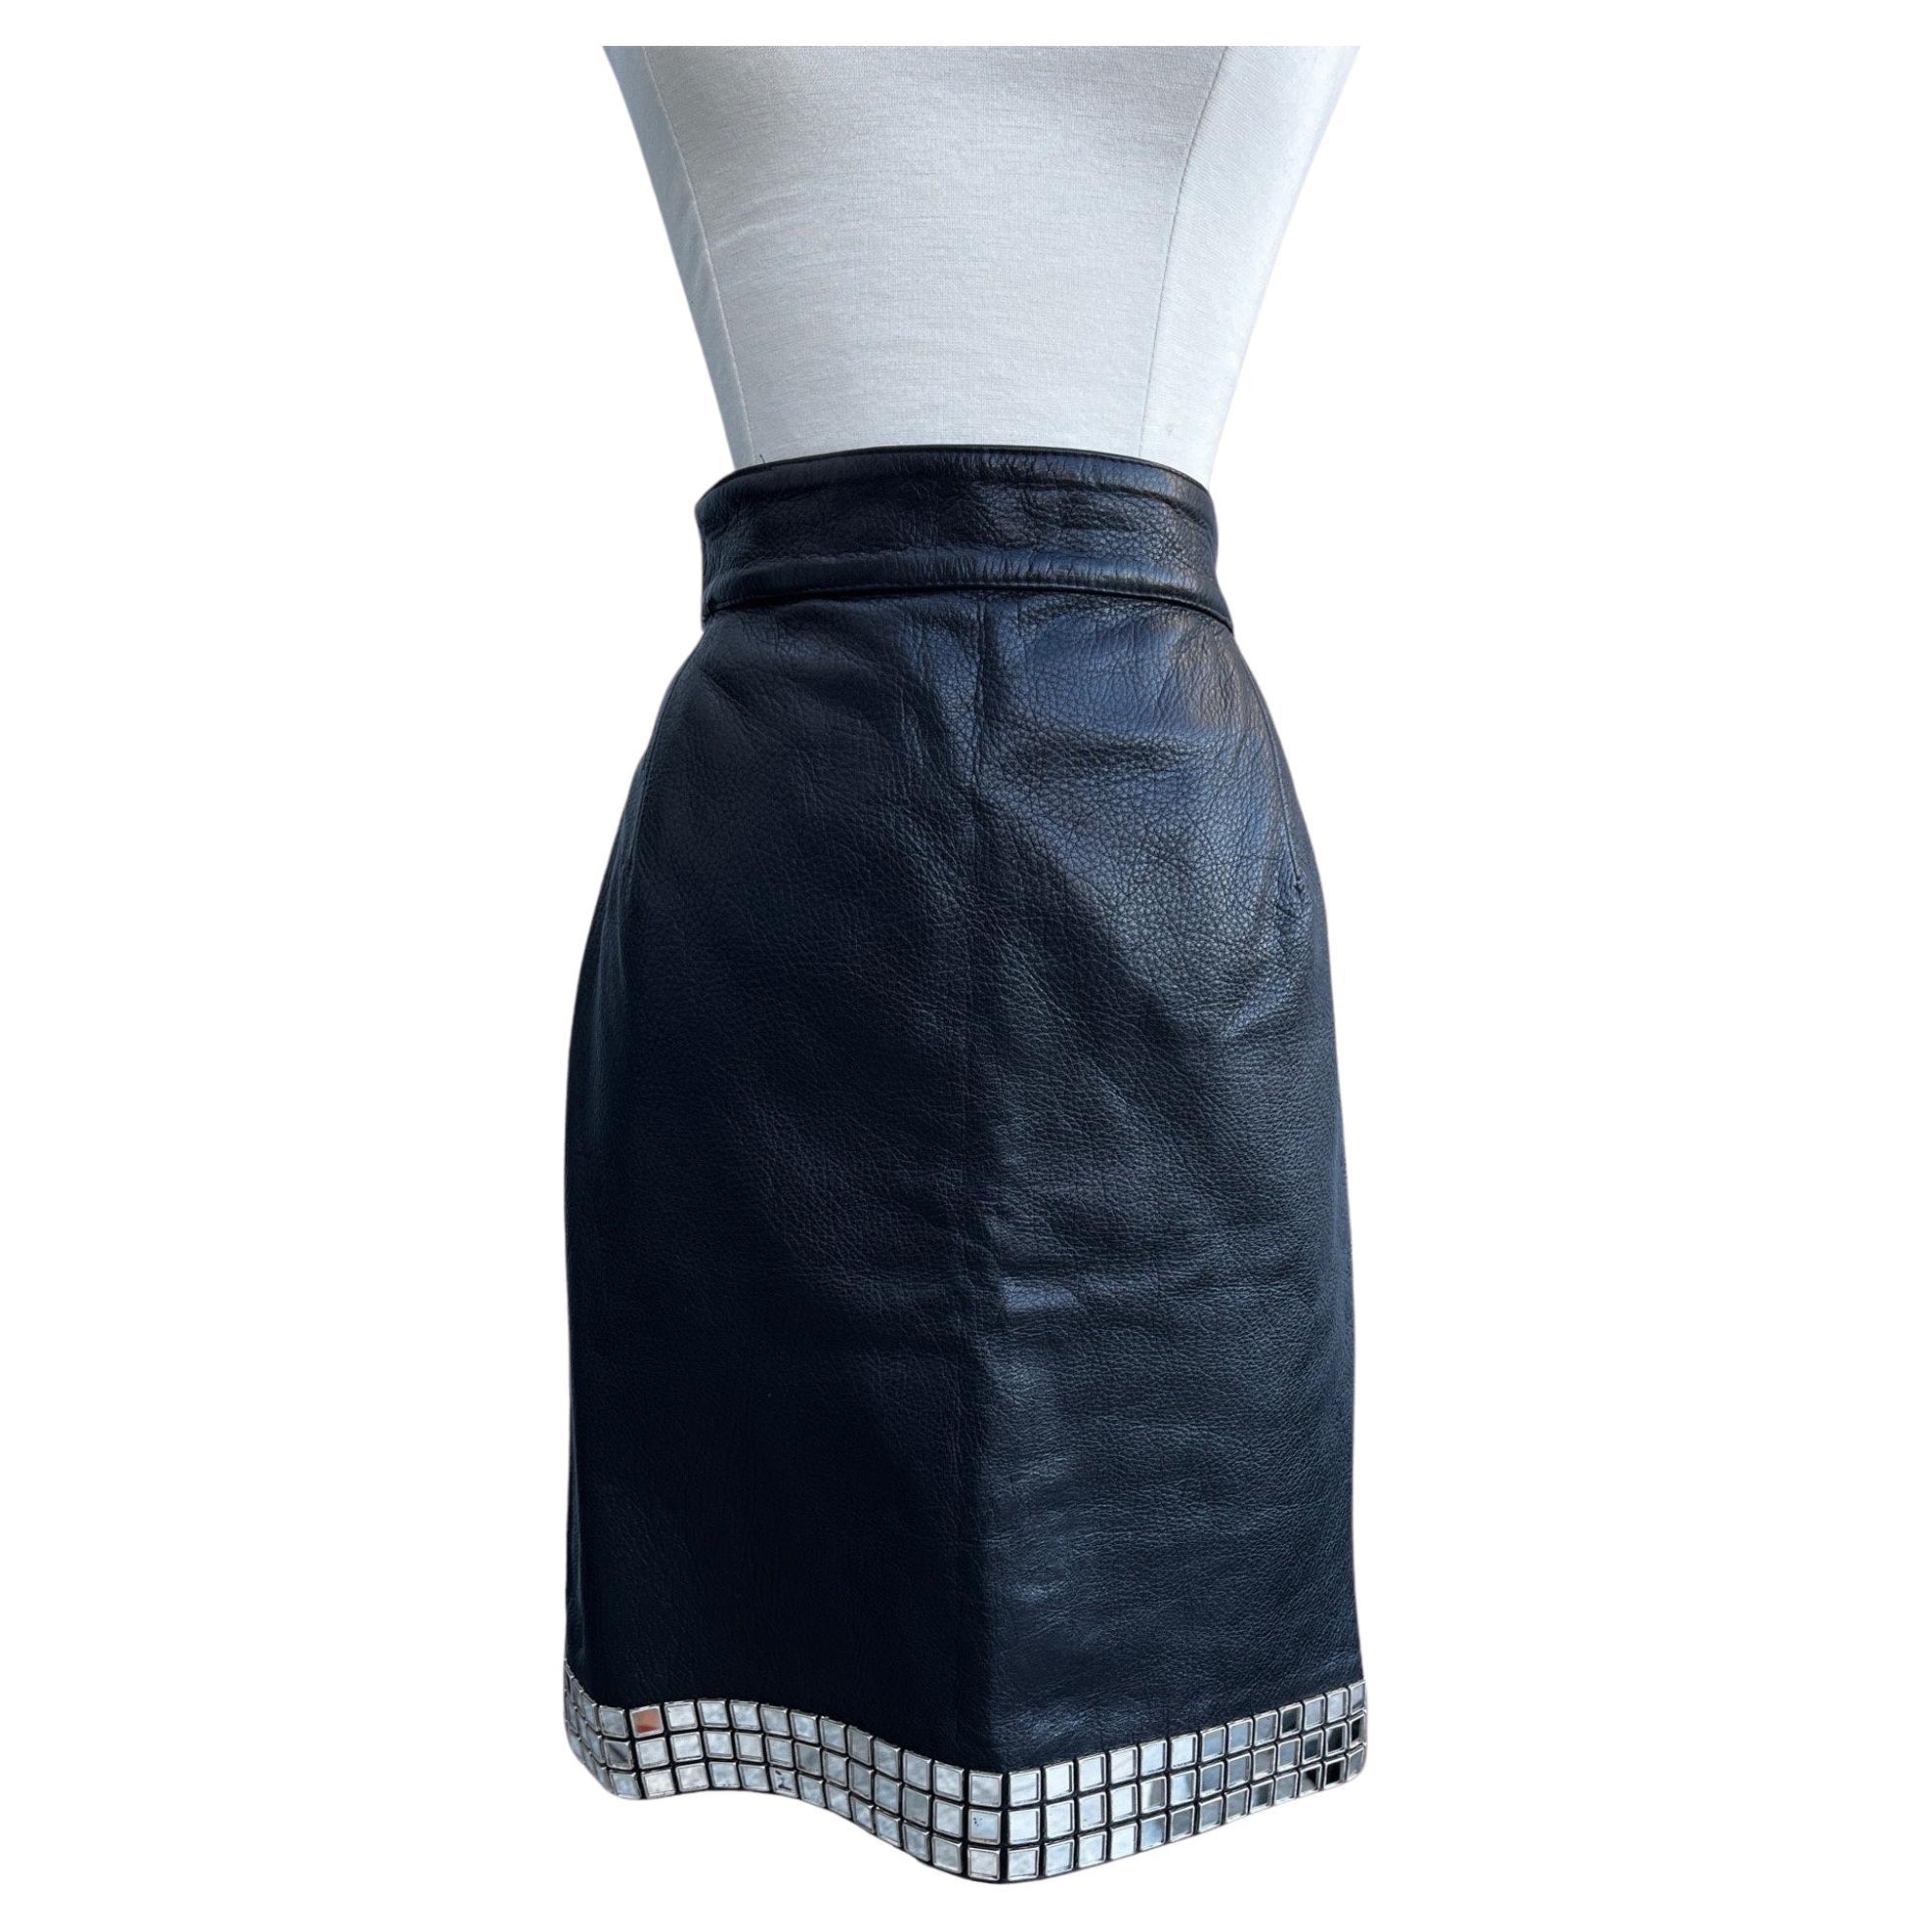 Moschino black leather mirror skirt